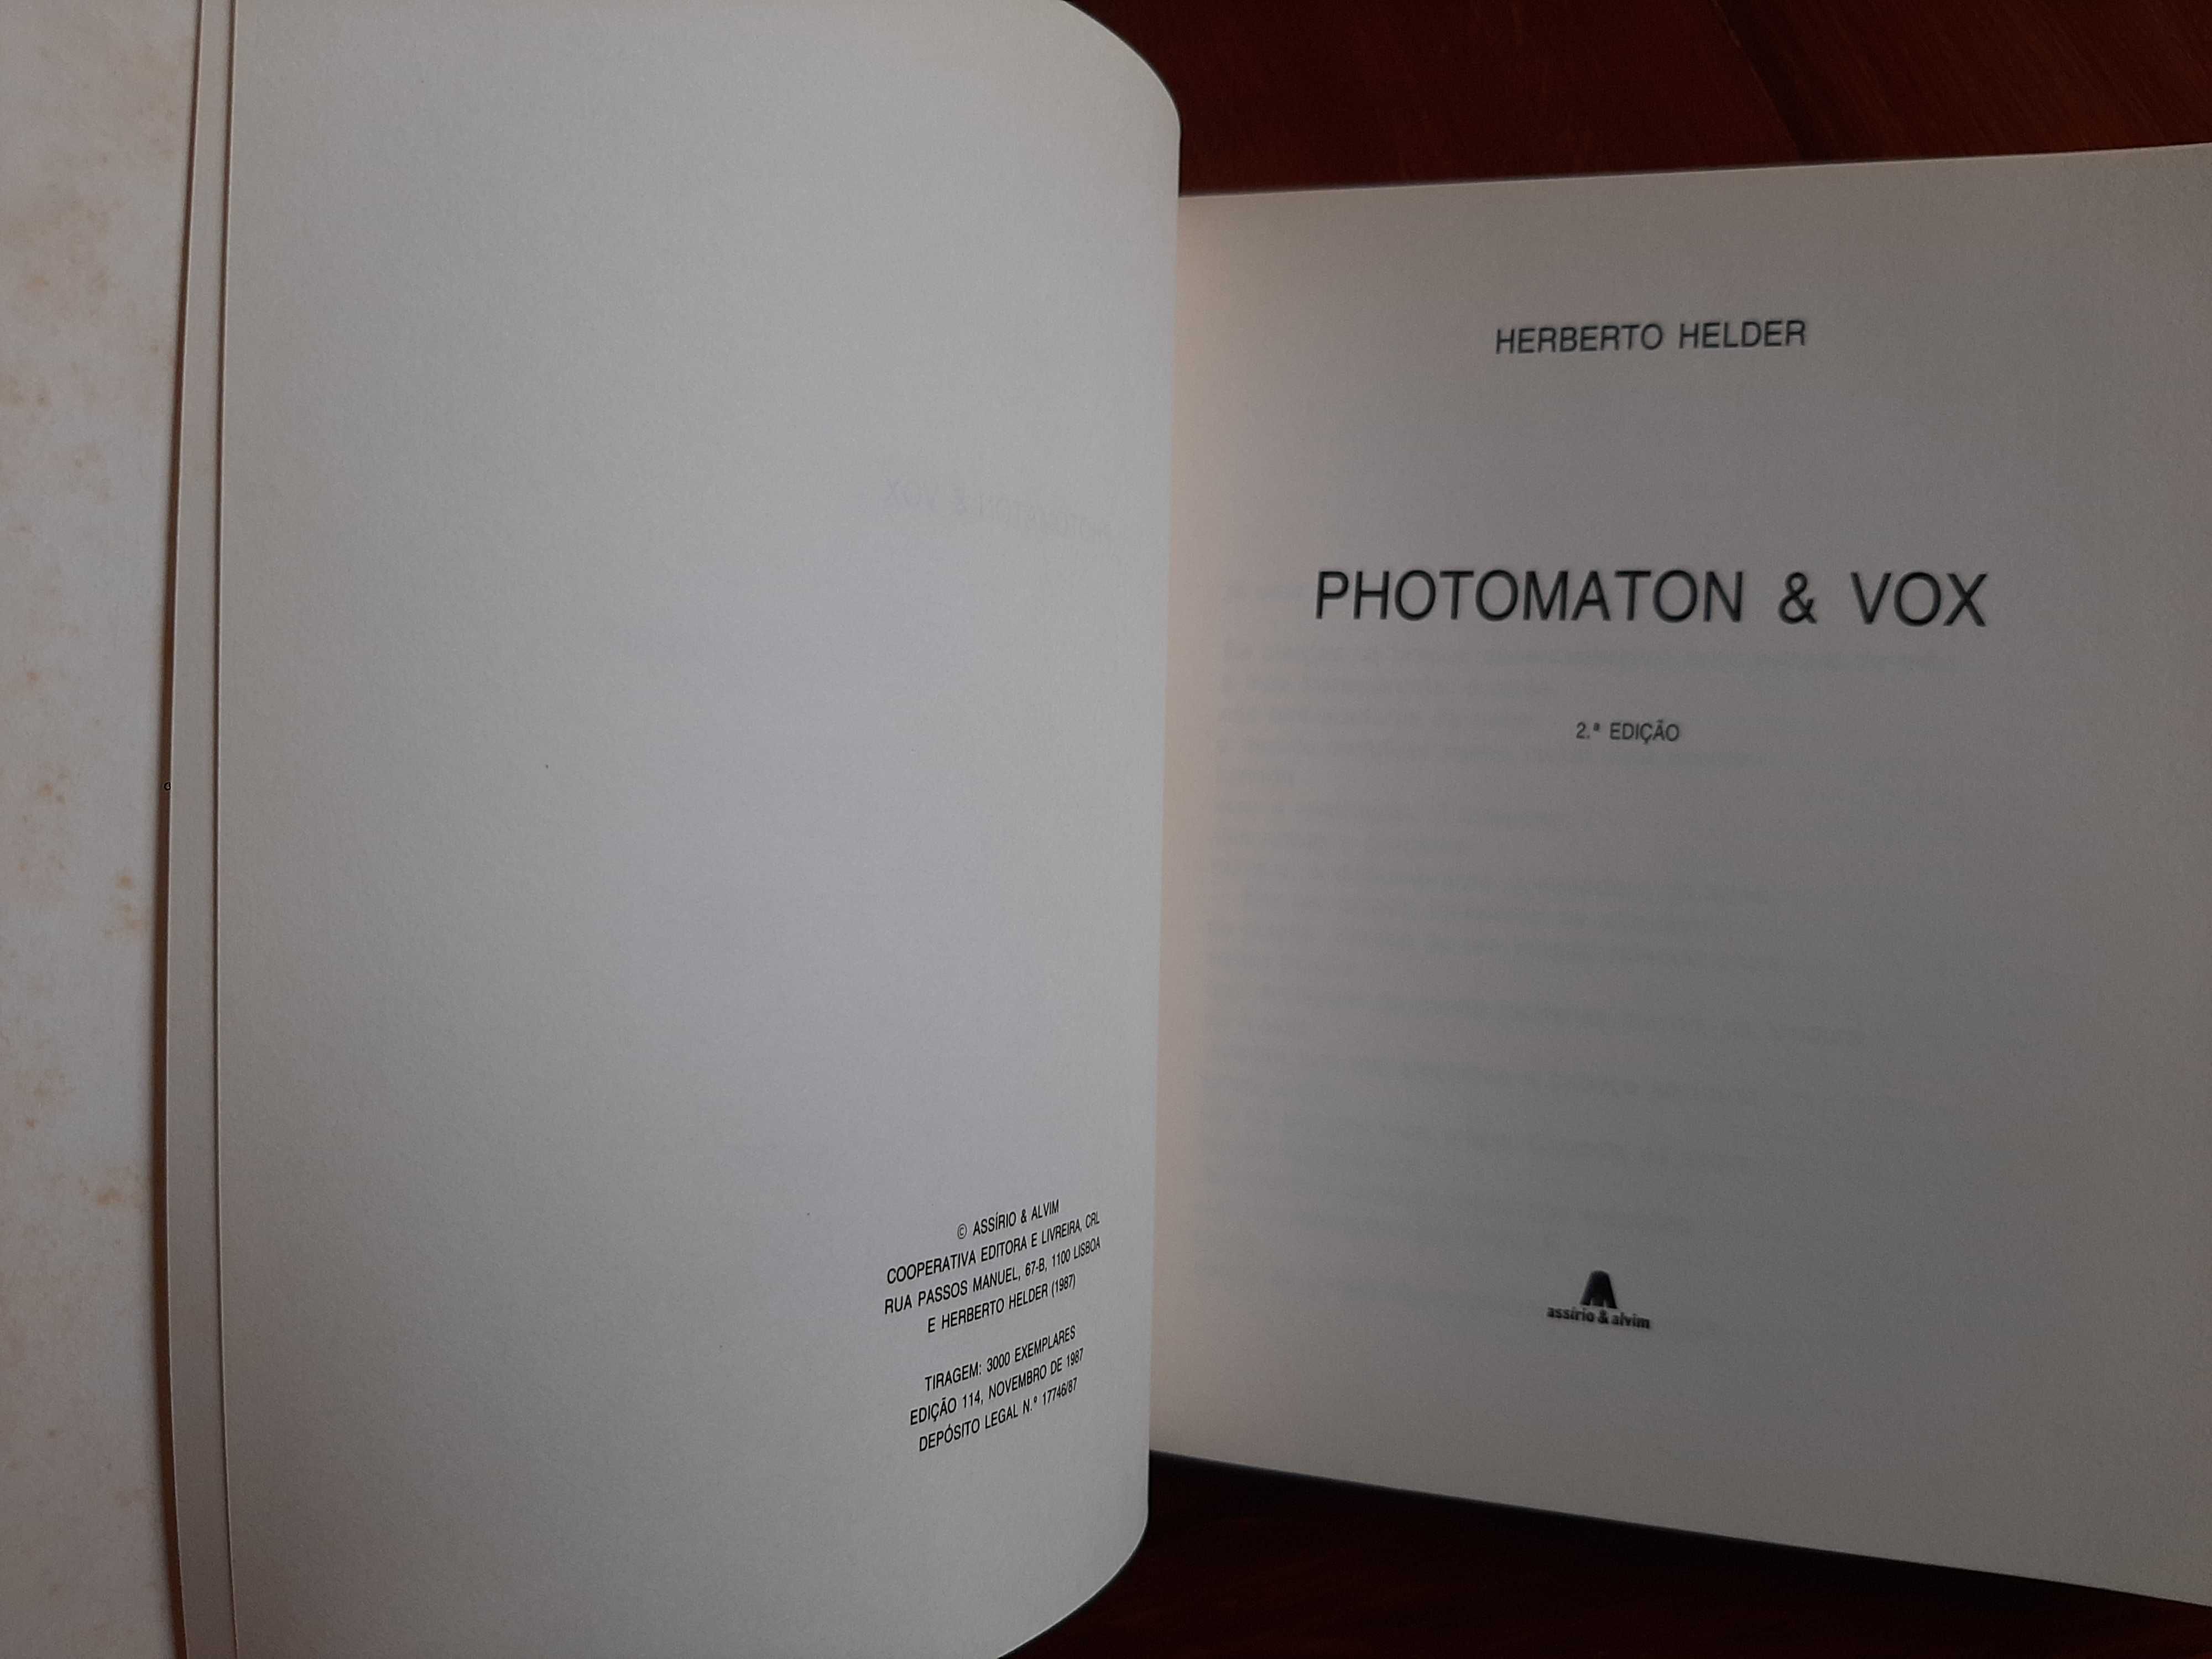 Photomaton & Vox de Herberto Helder